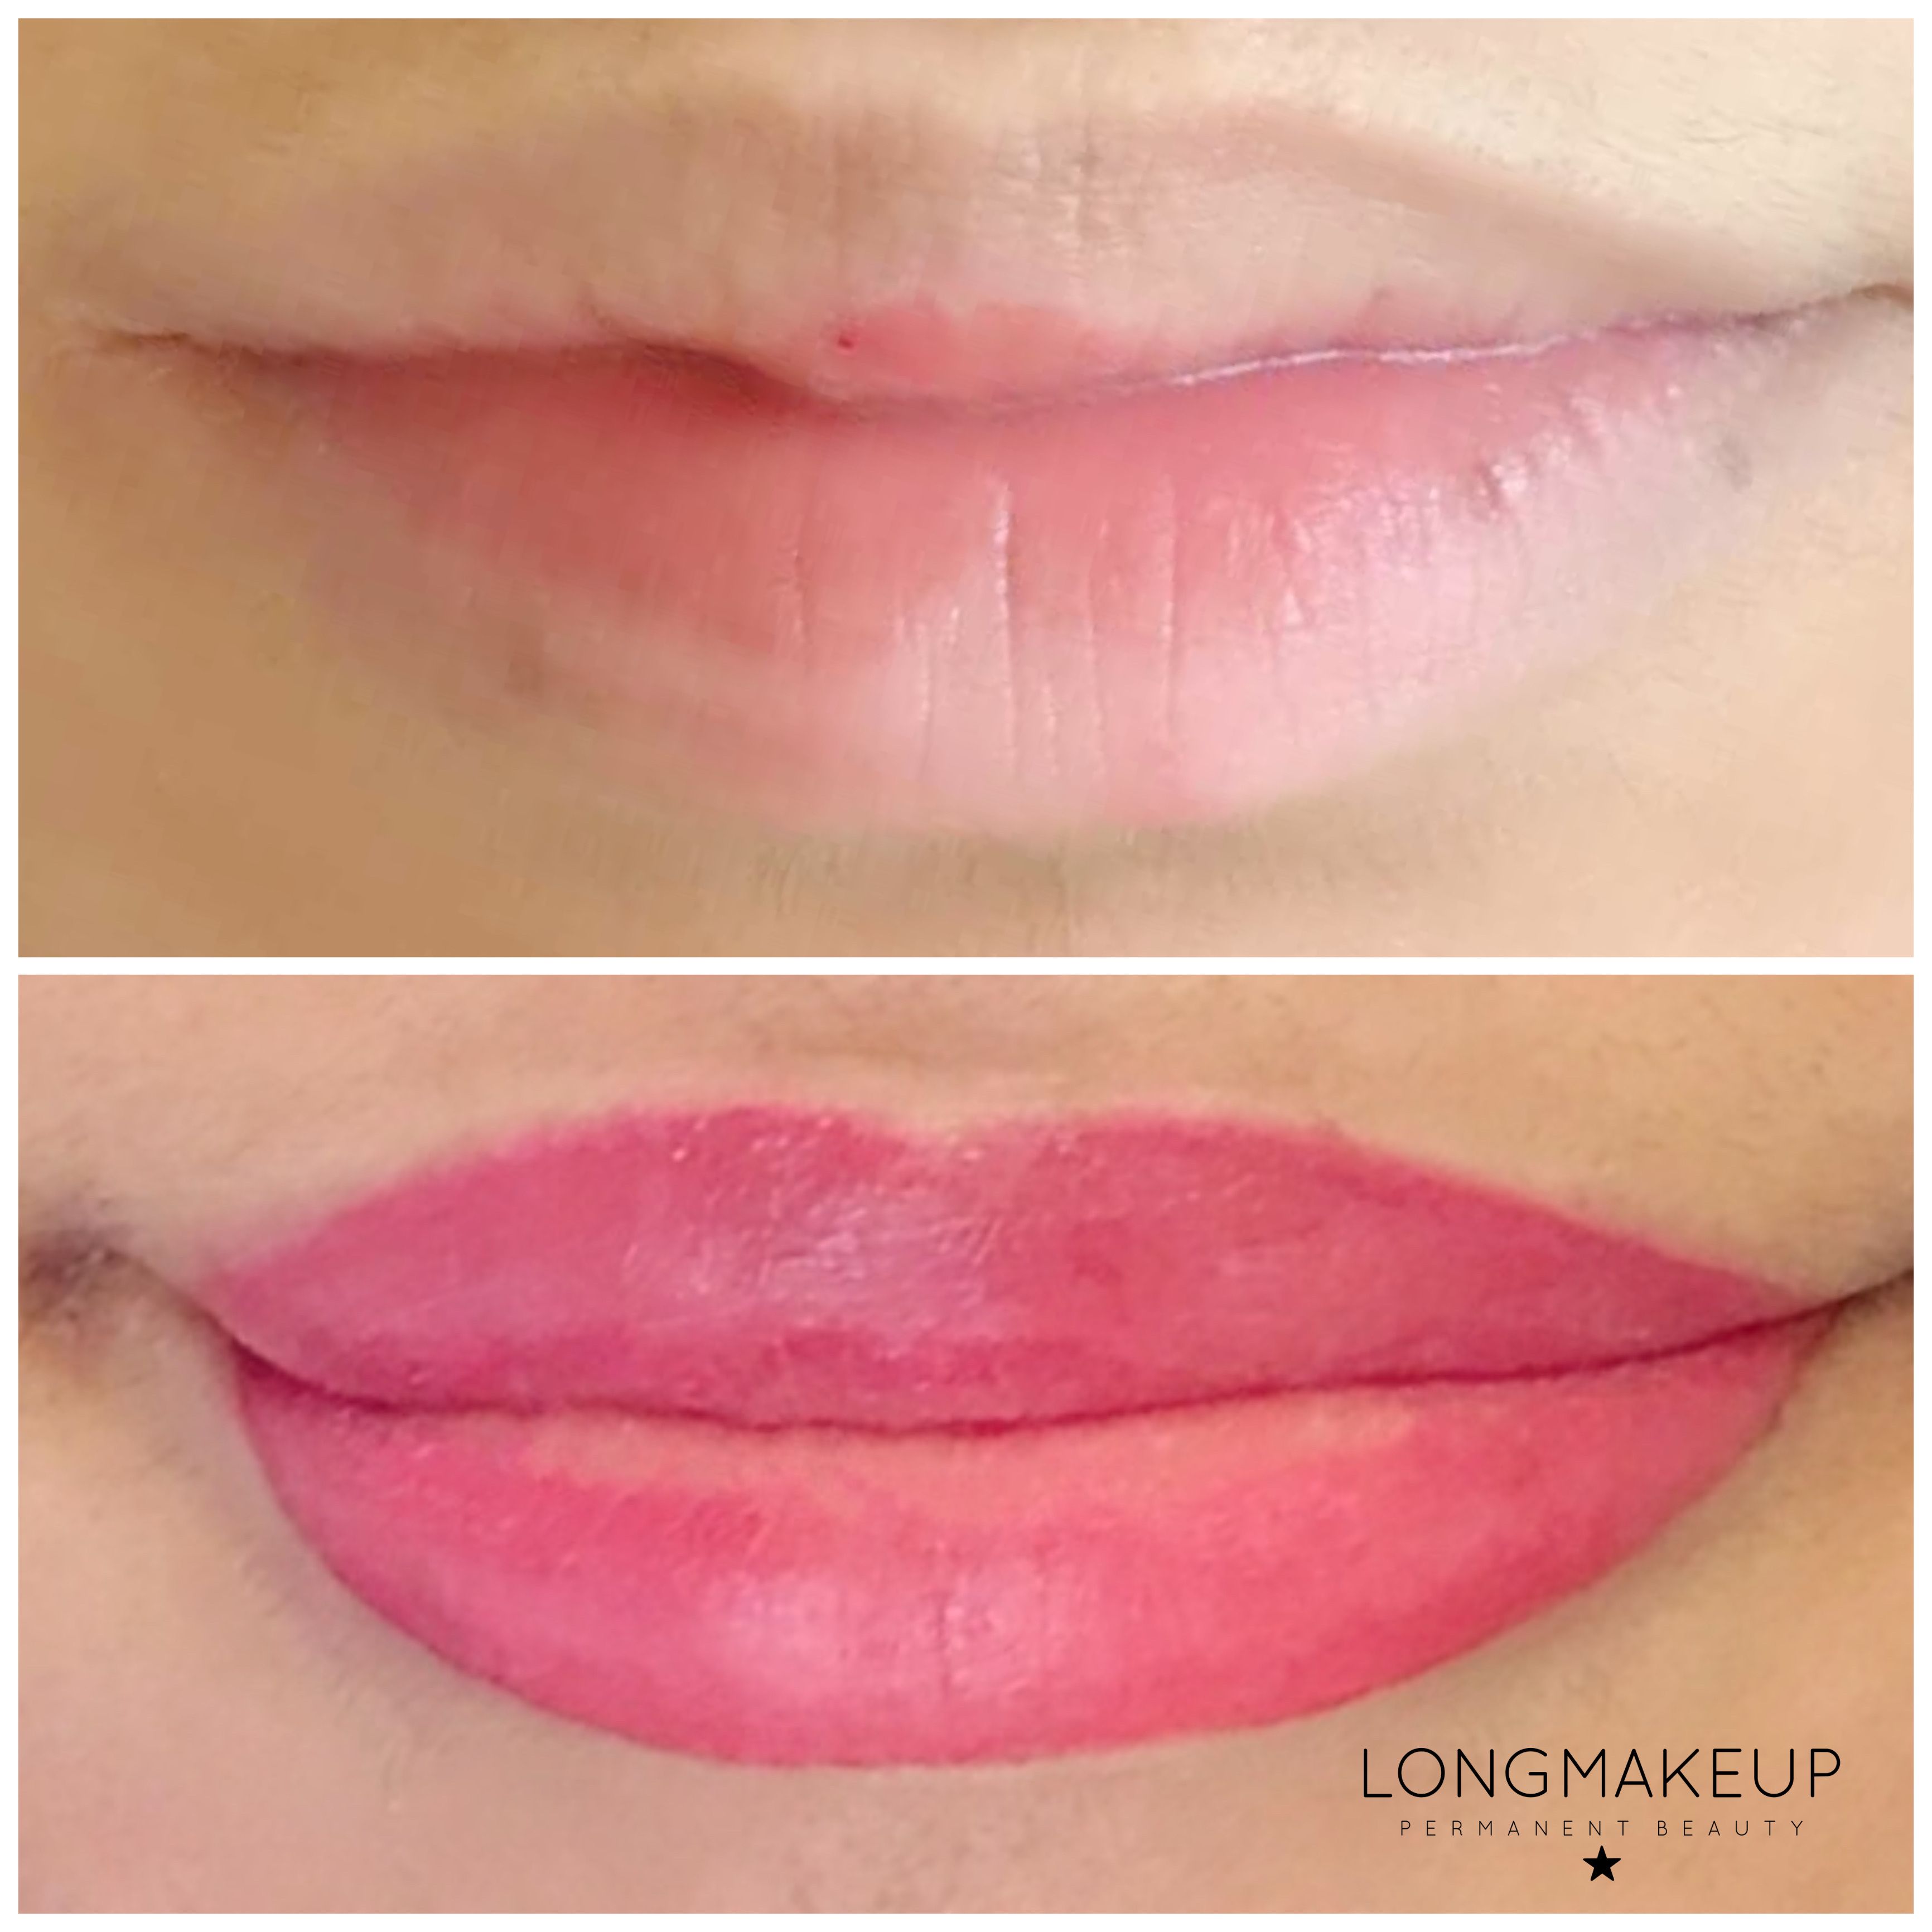 Permanent makeup lips